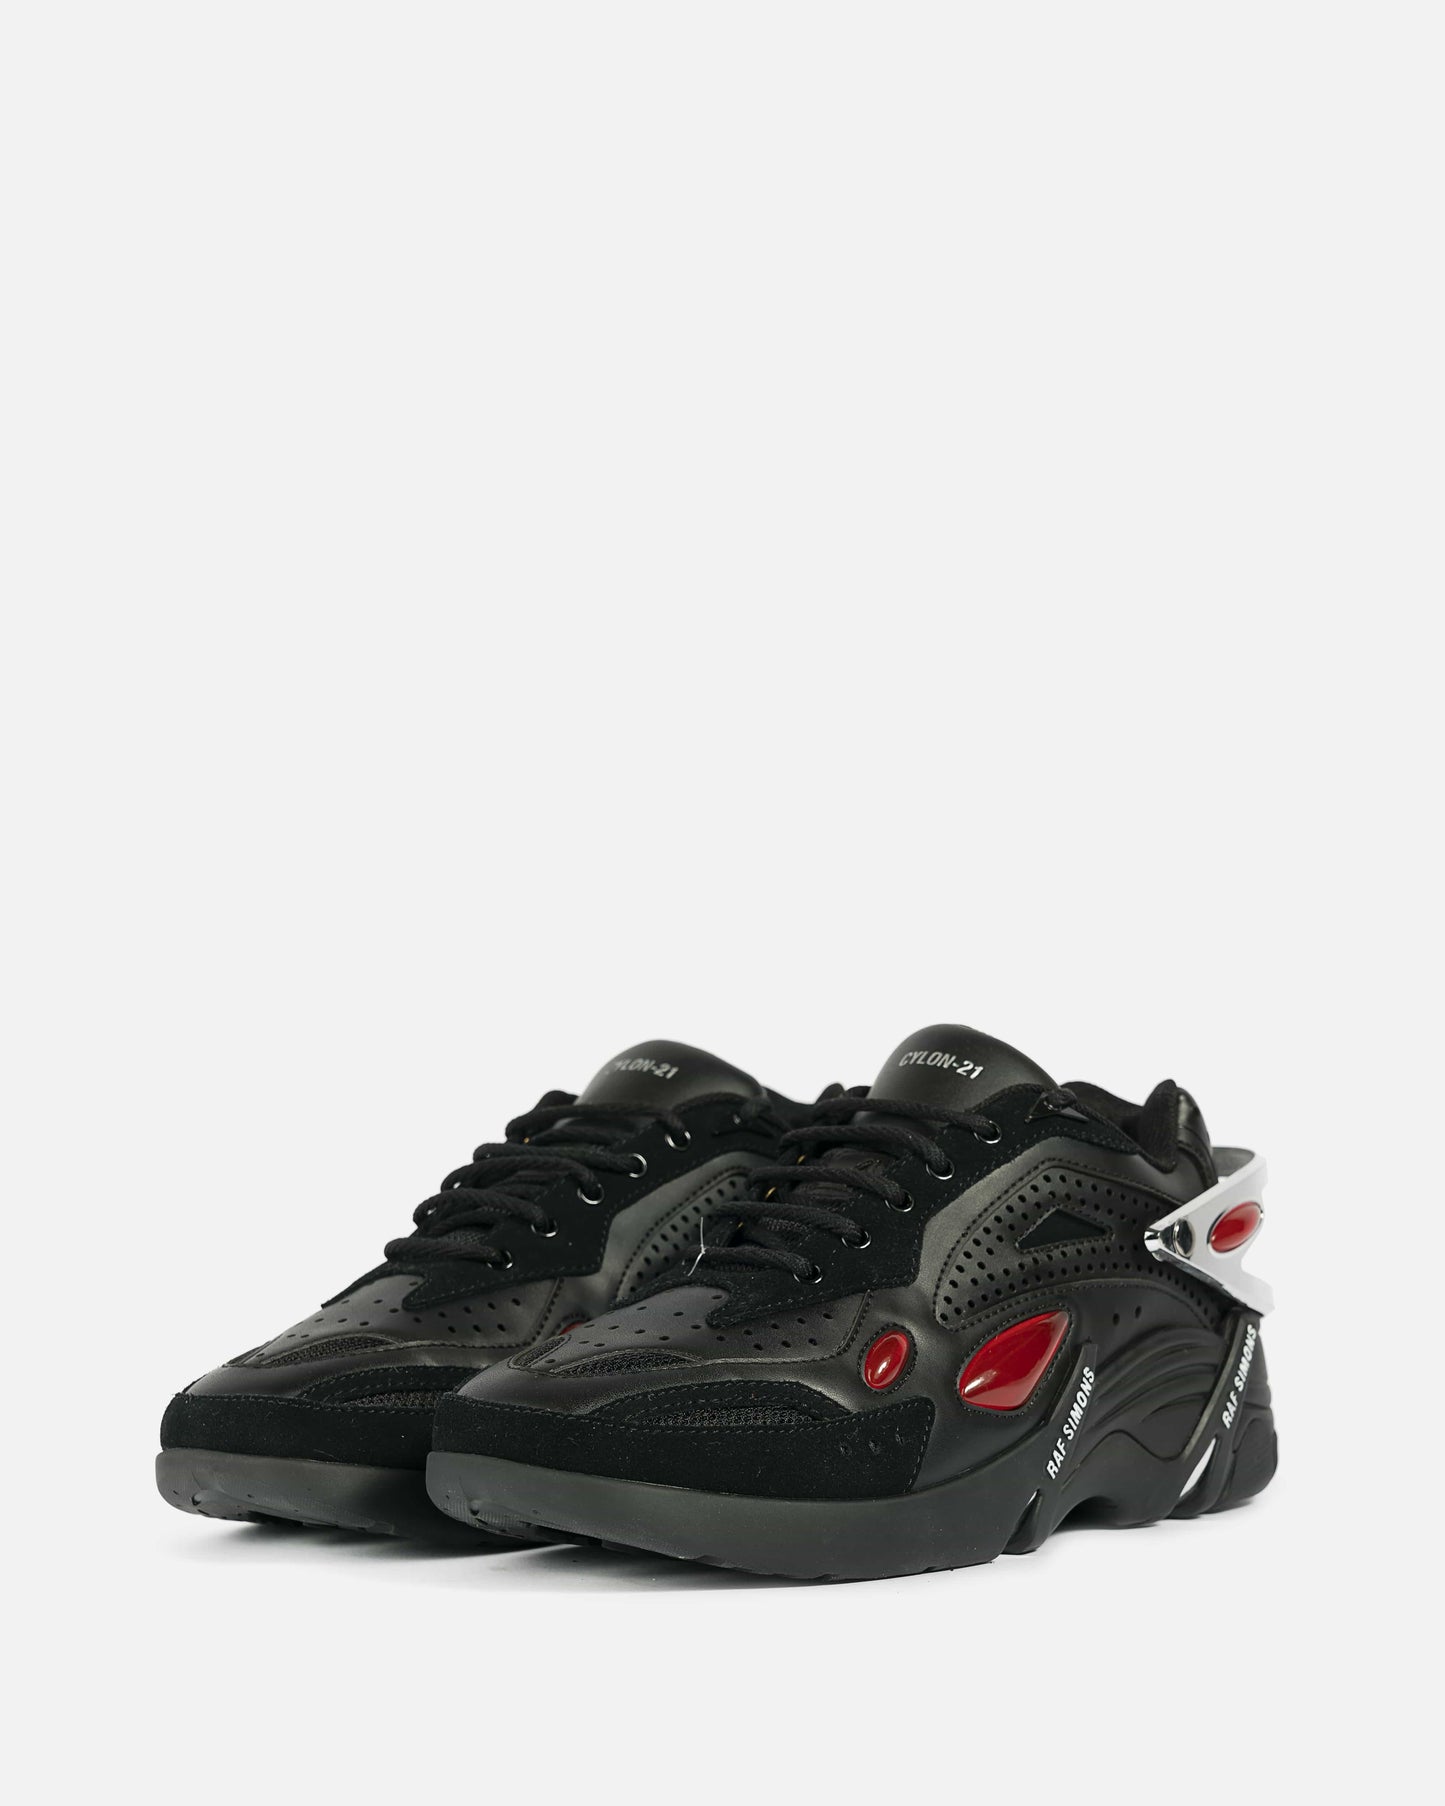 Raf Simons Men's Sneakers Cylon 21 in Black/Red